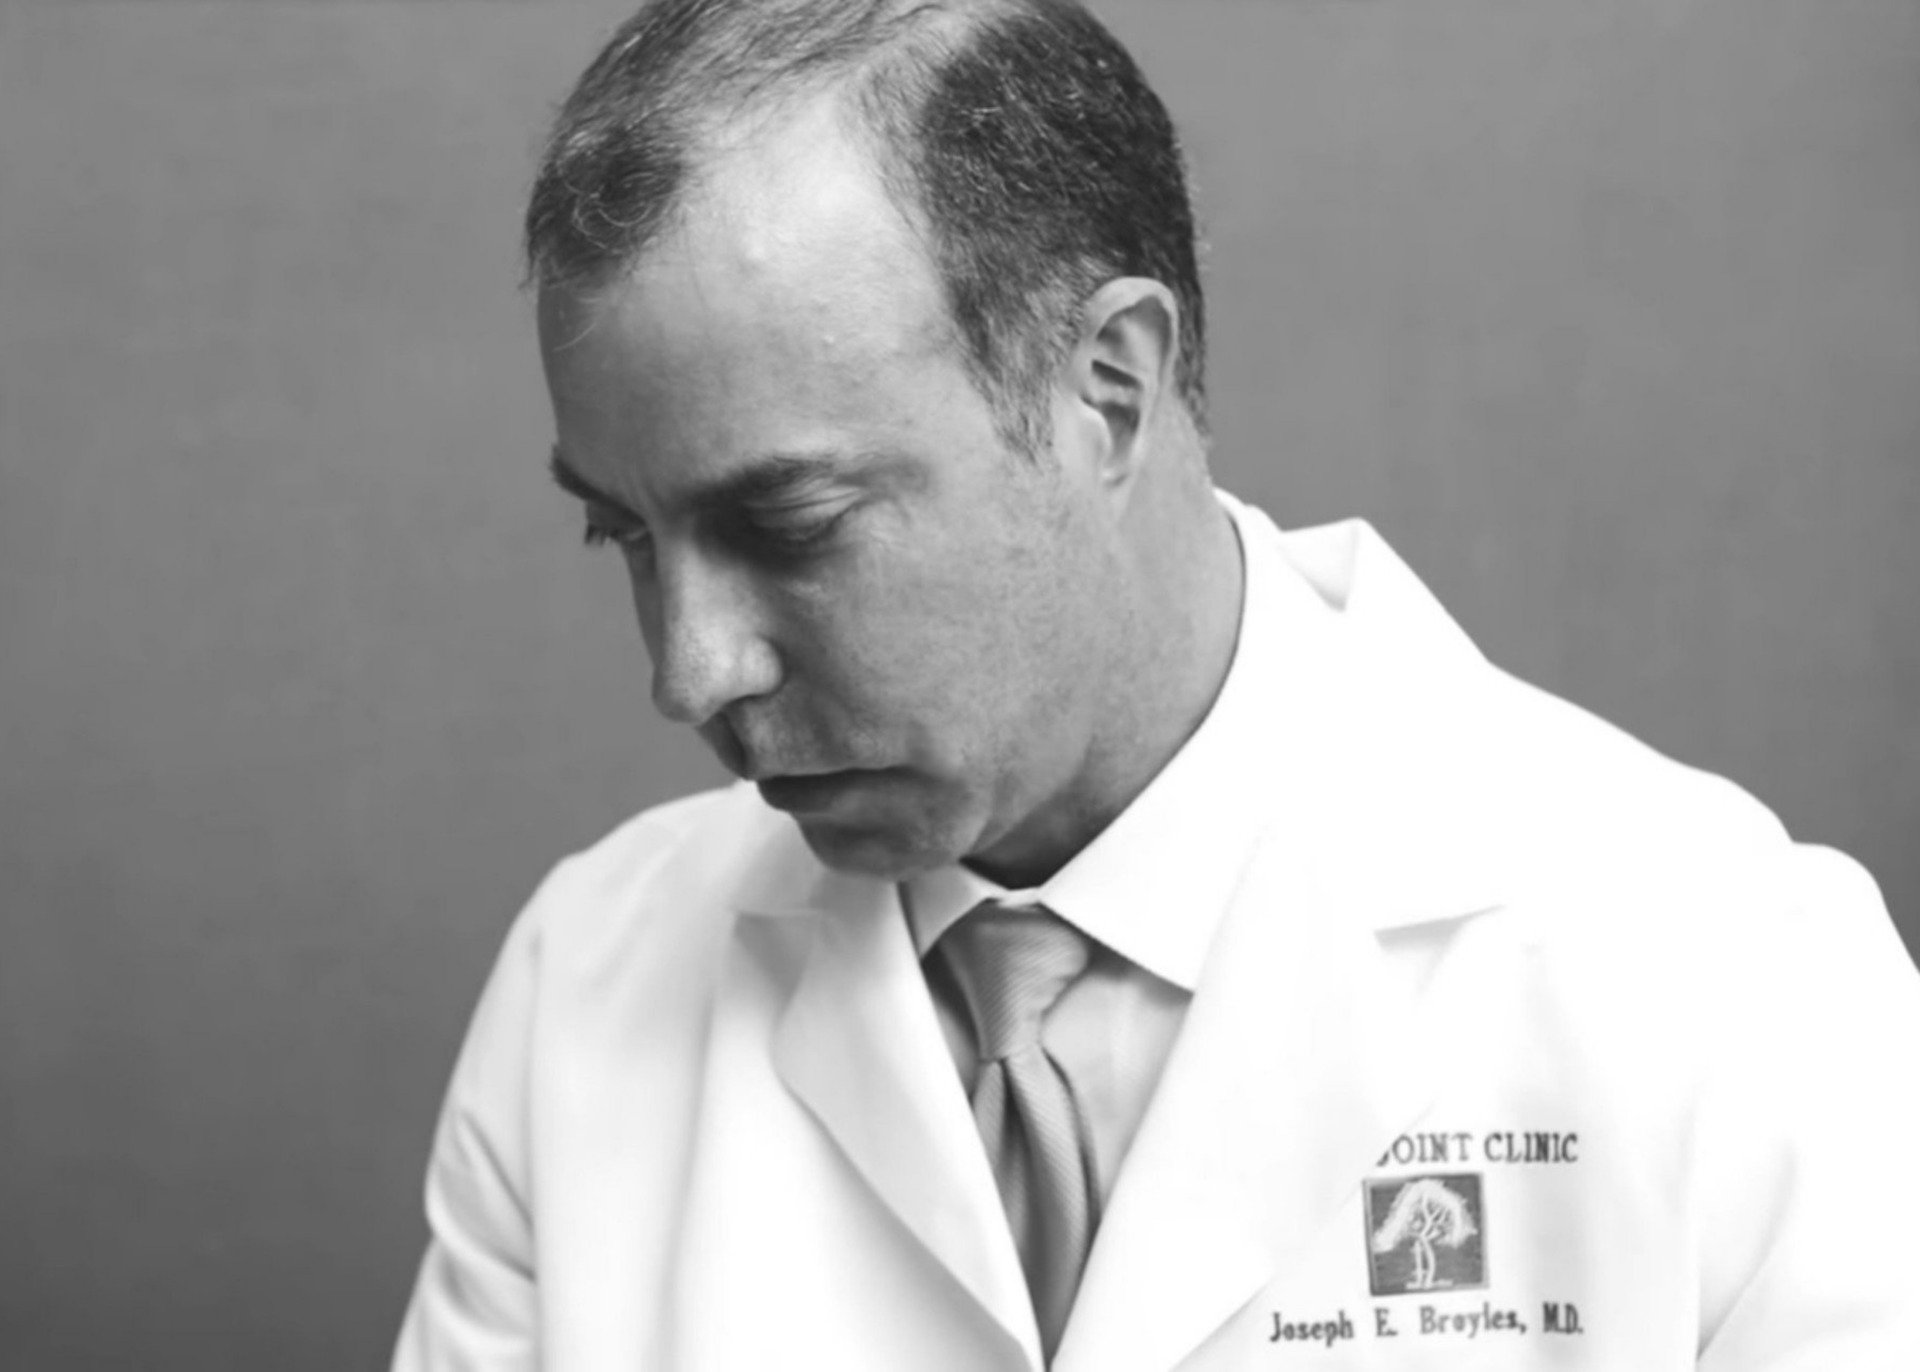 Dr. Joseph E. Broyles at the Cartilage Regeneration Center